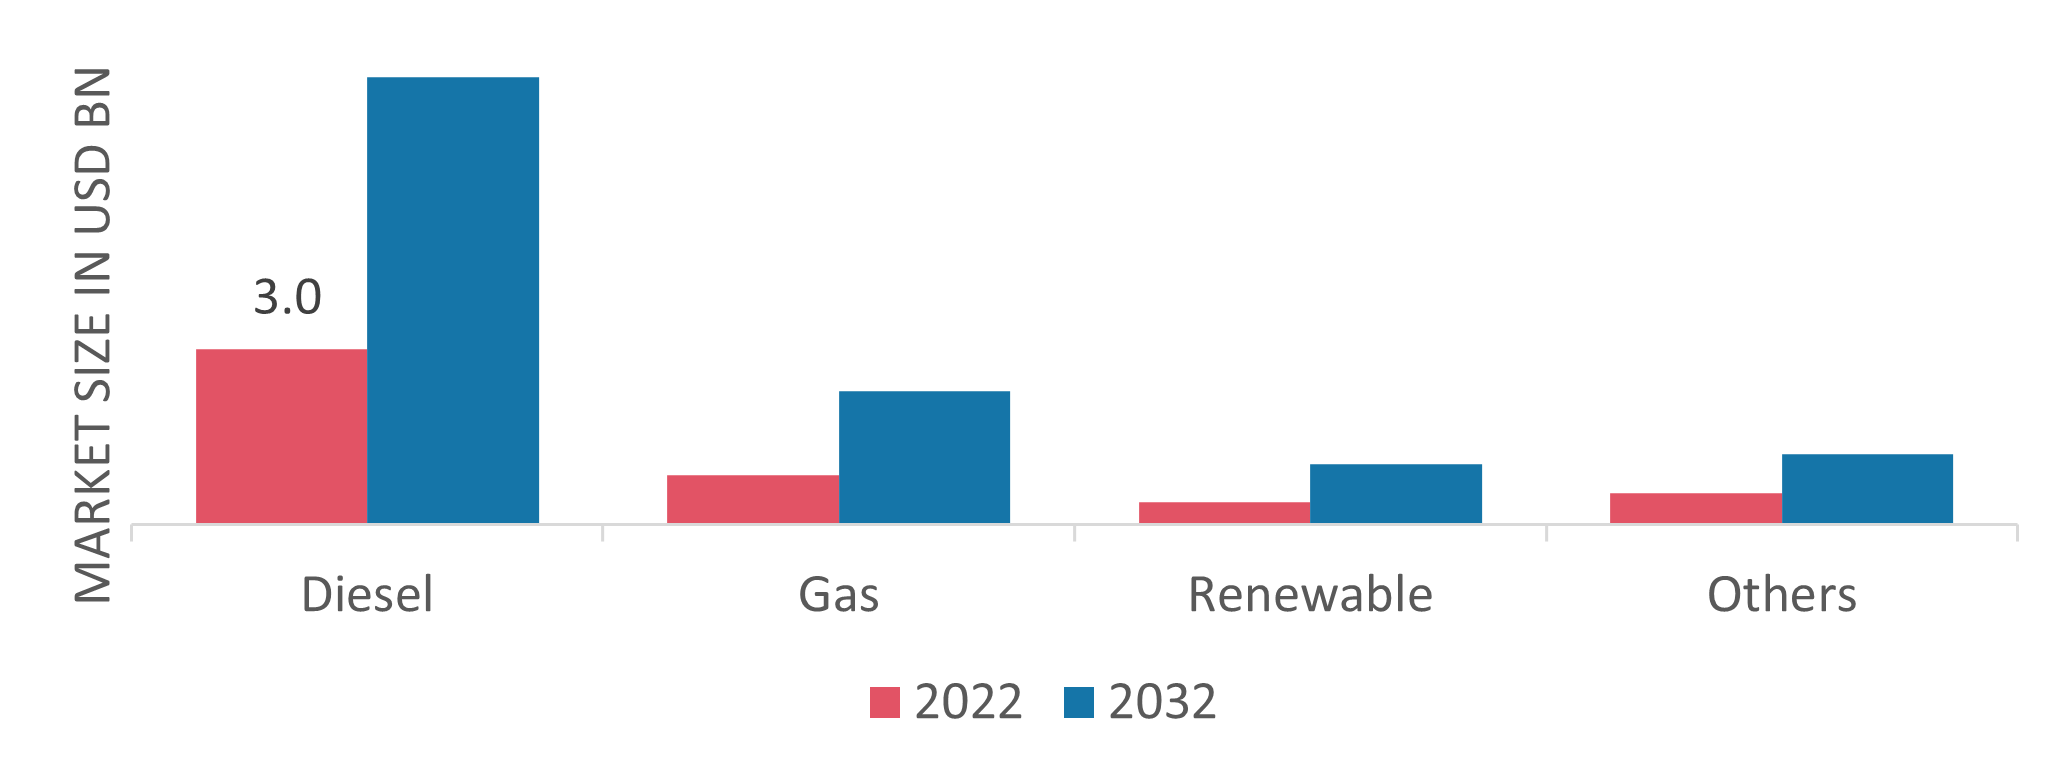 Temporary Power Market by Fuel Type, 2022 & 2032 (USD Billion)